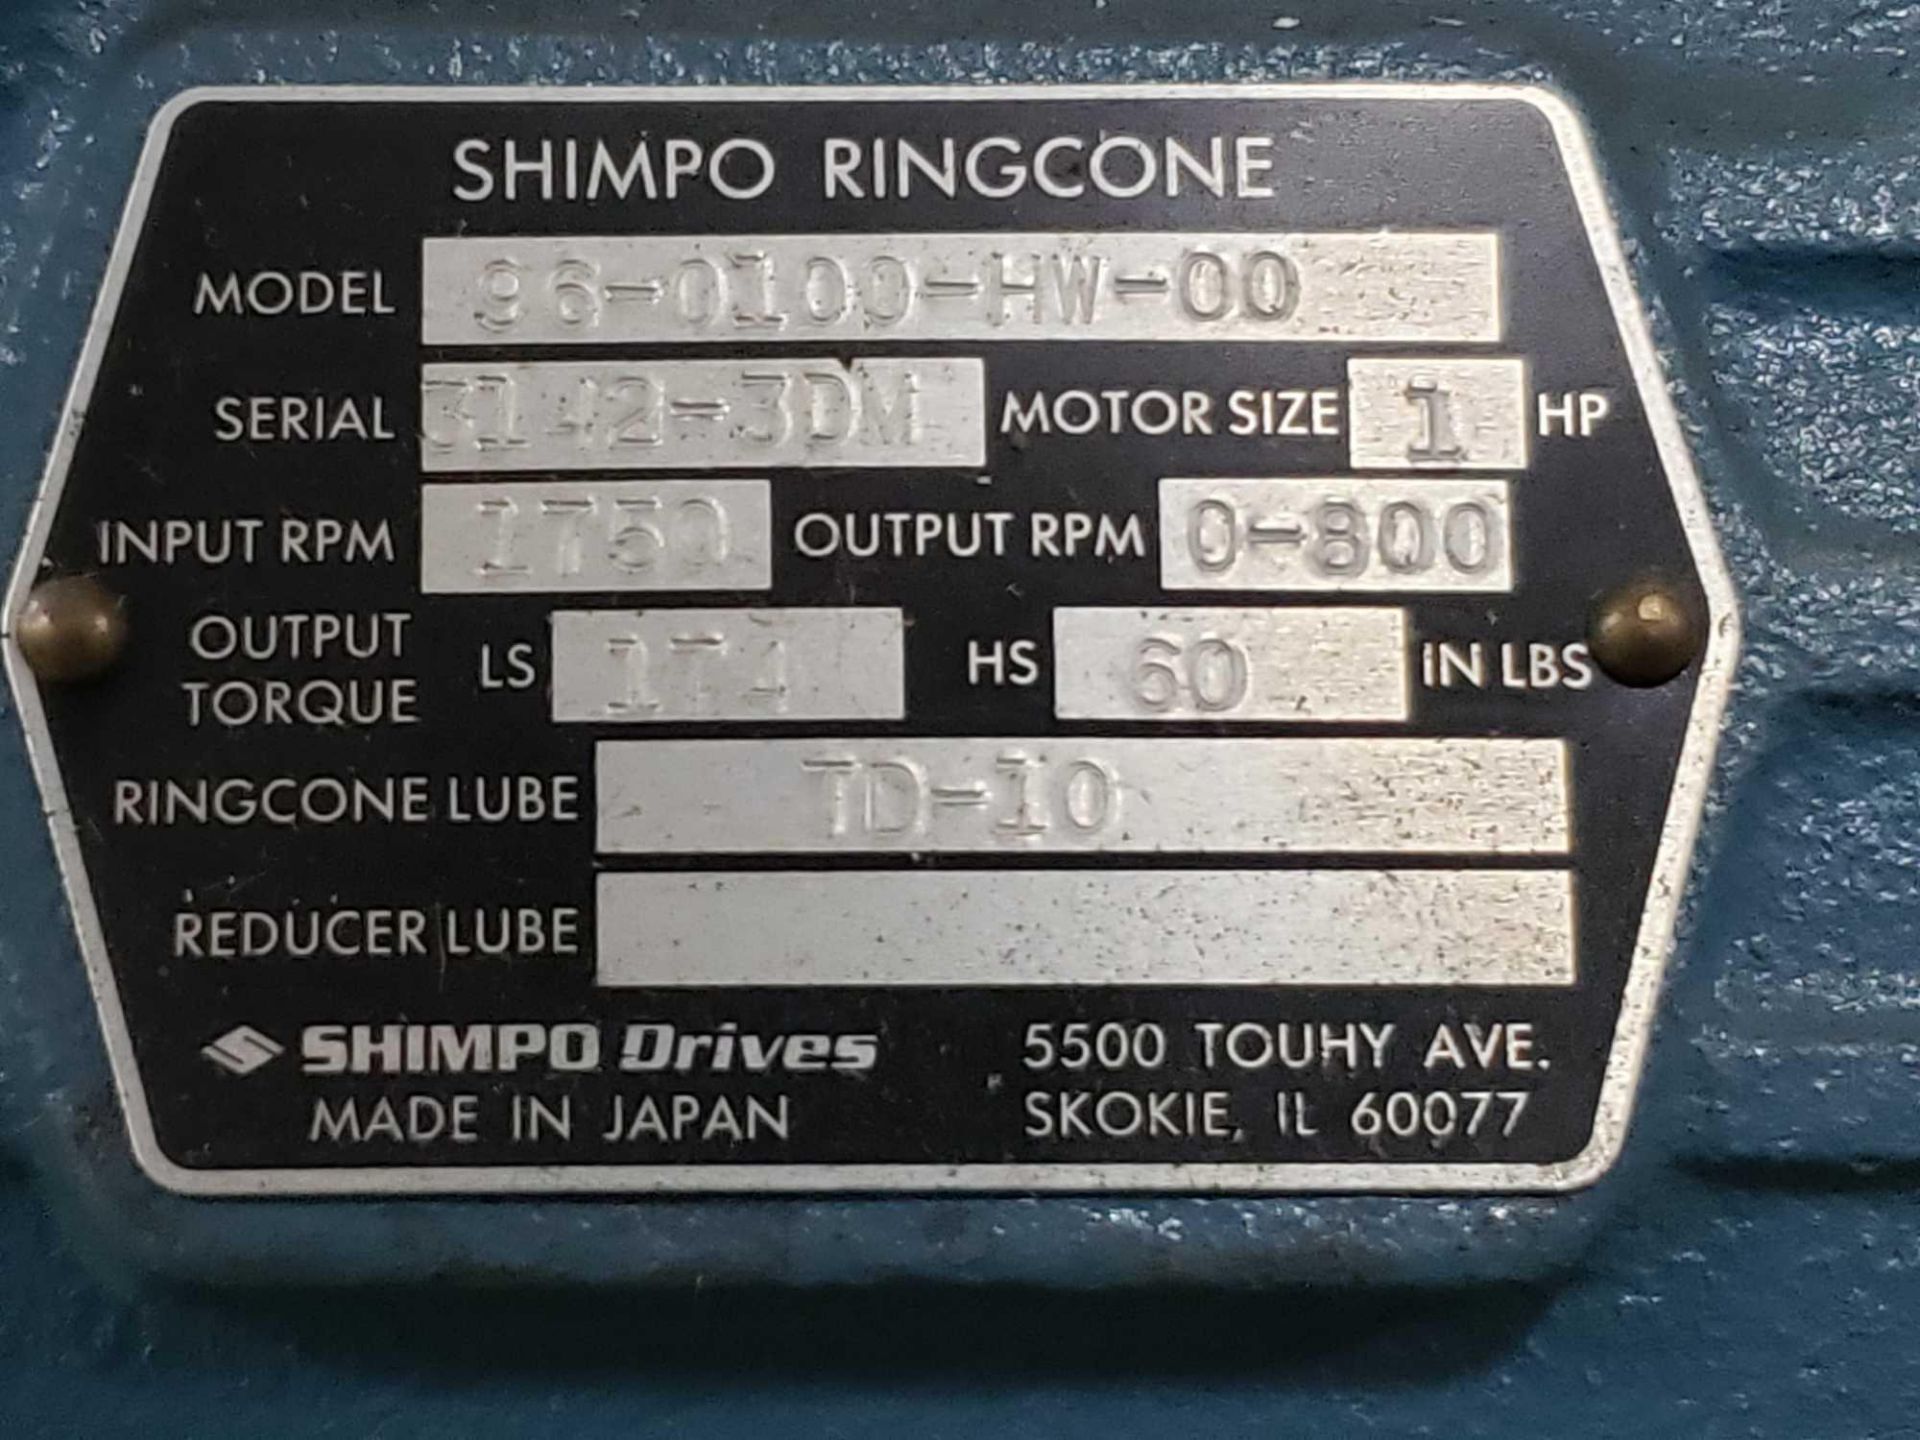 Shimpro Ringcone gear box speed reducer model 96-0100-HW-00. New in box. - Image 2 of 3